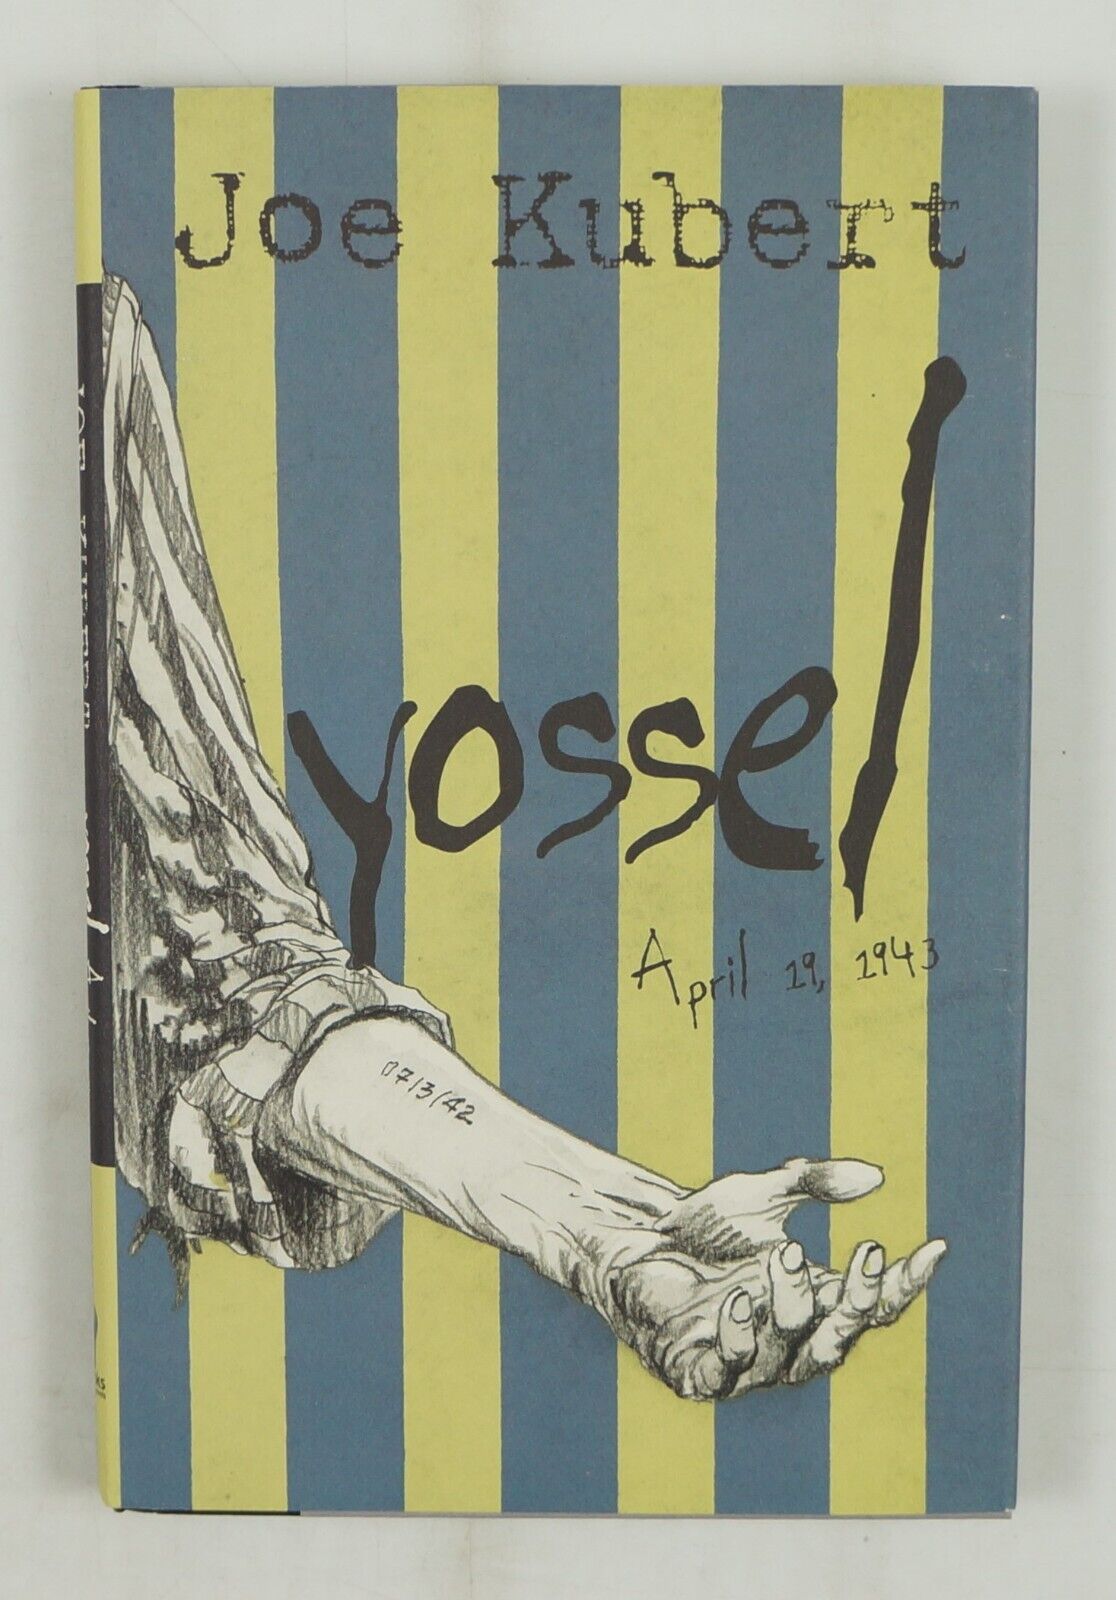 Yossel April 19, 1943 HC w DJ VF/NM SIGNED by Joe Kubert - 2003 - 1st print